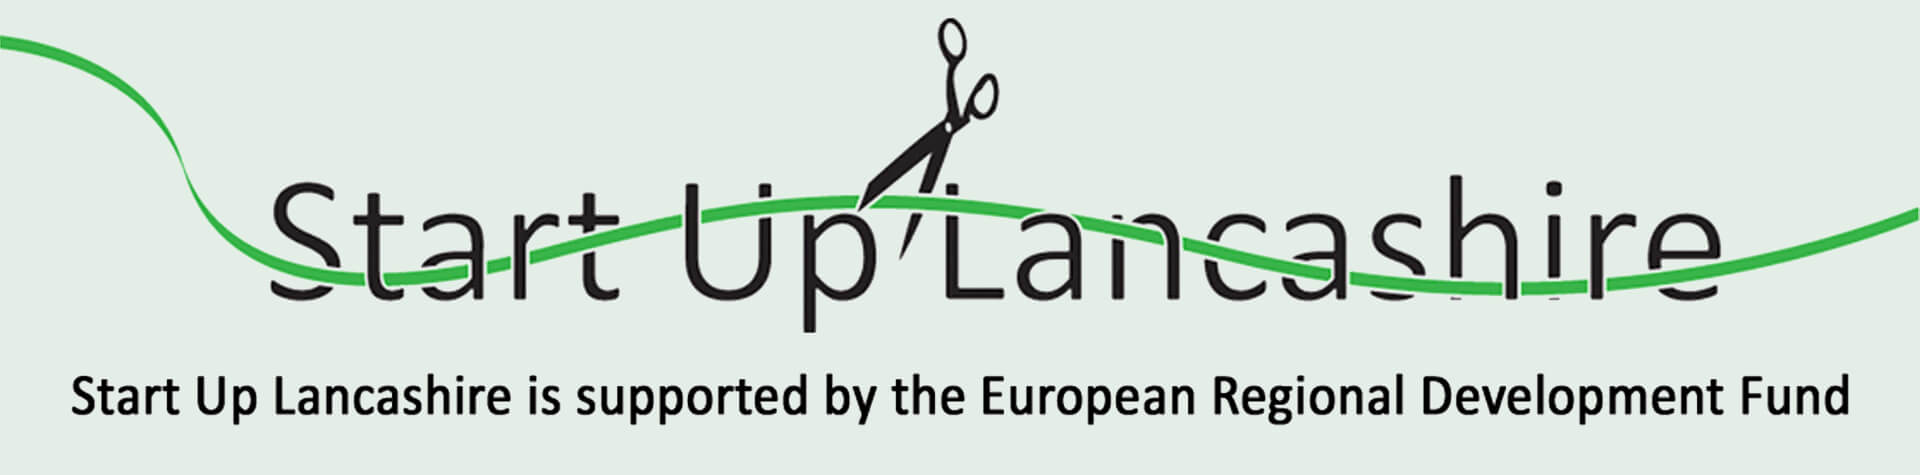 Start-up-lancs-logo-wide